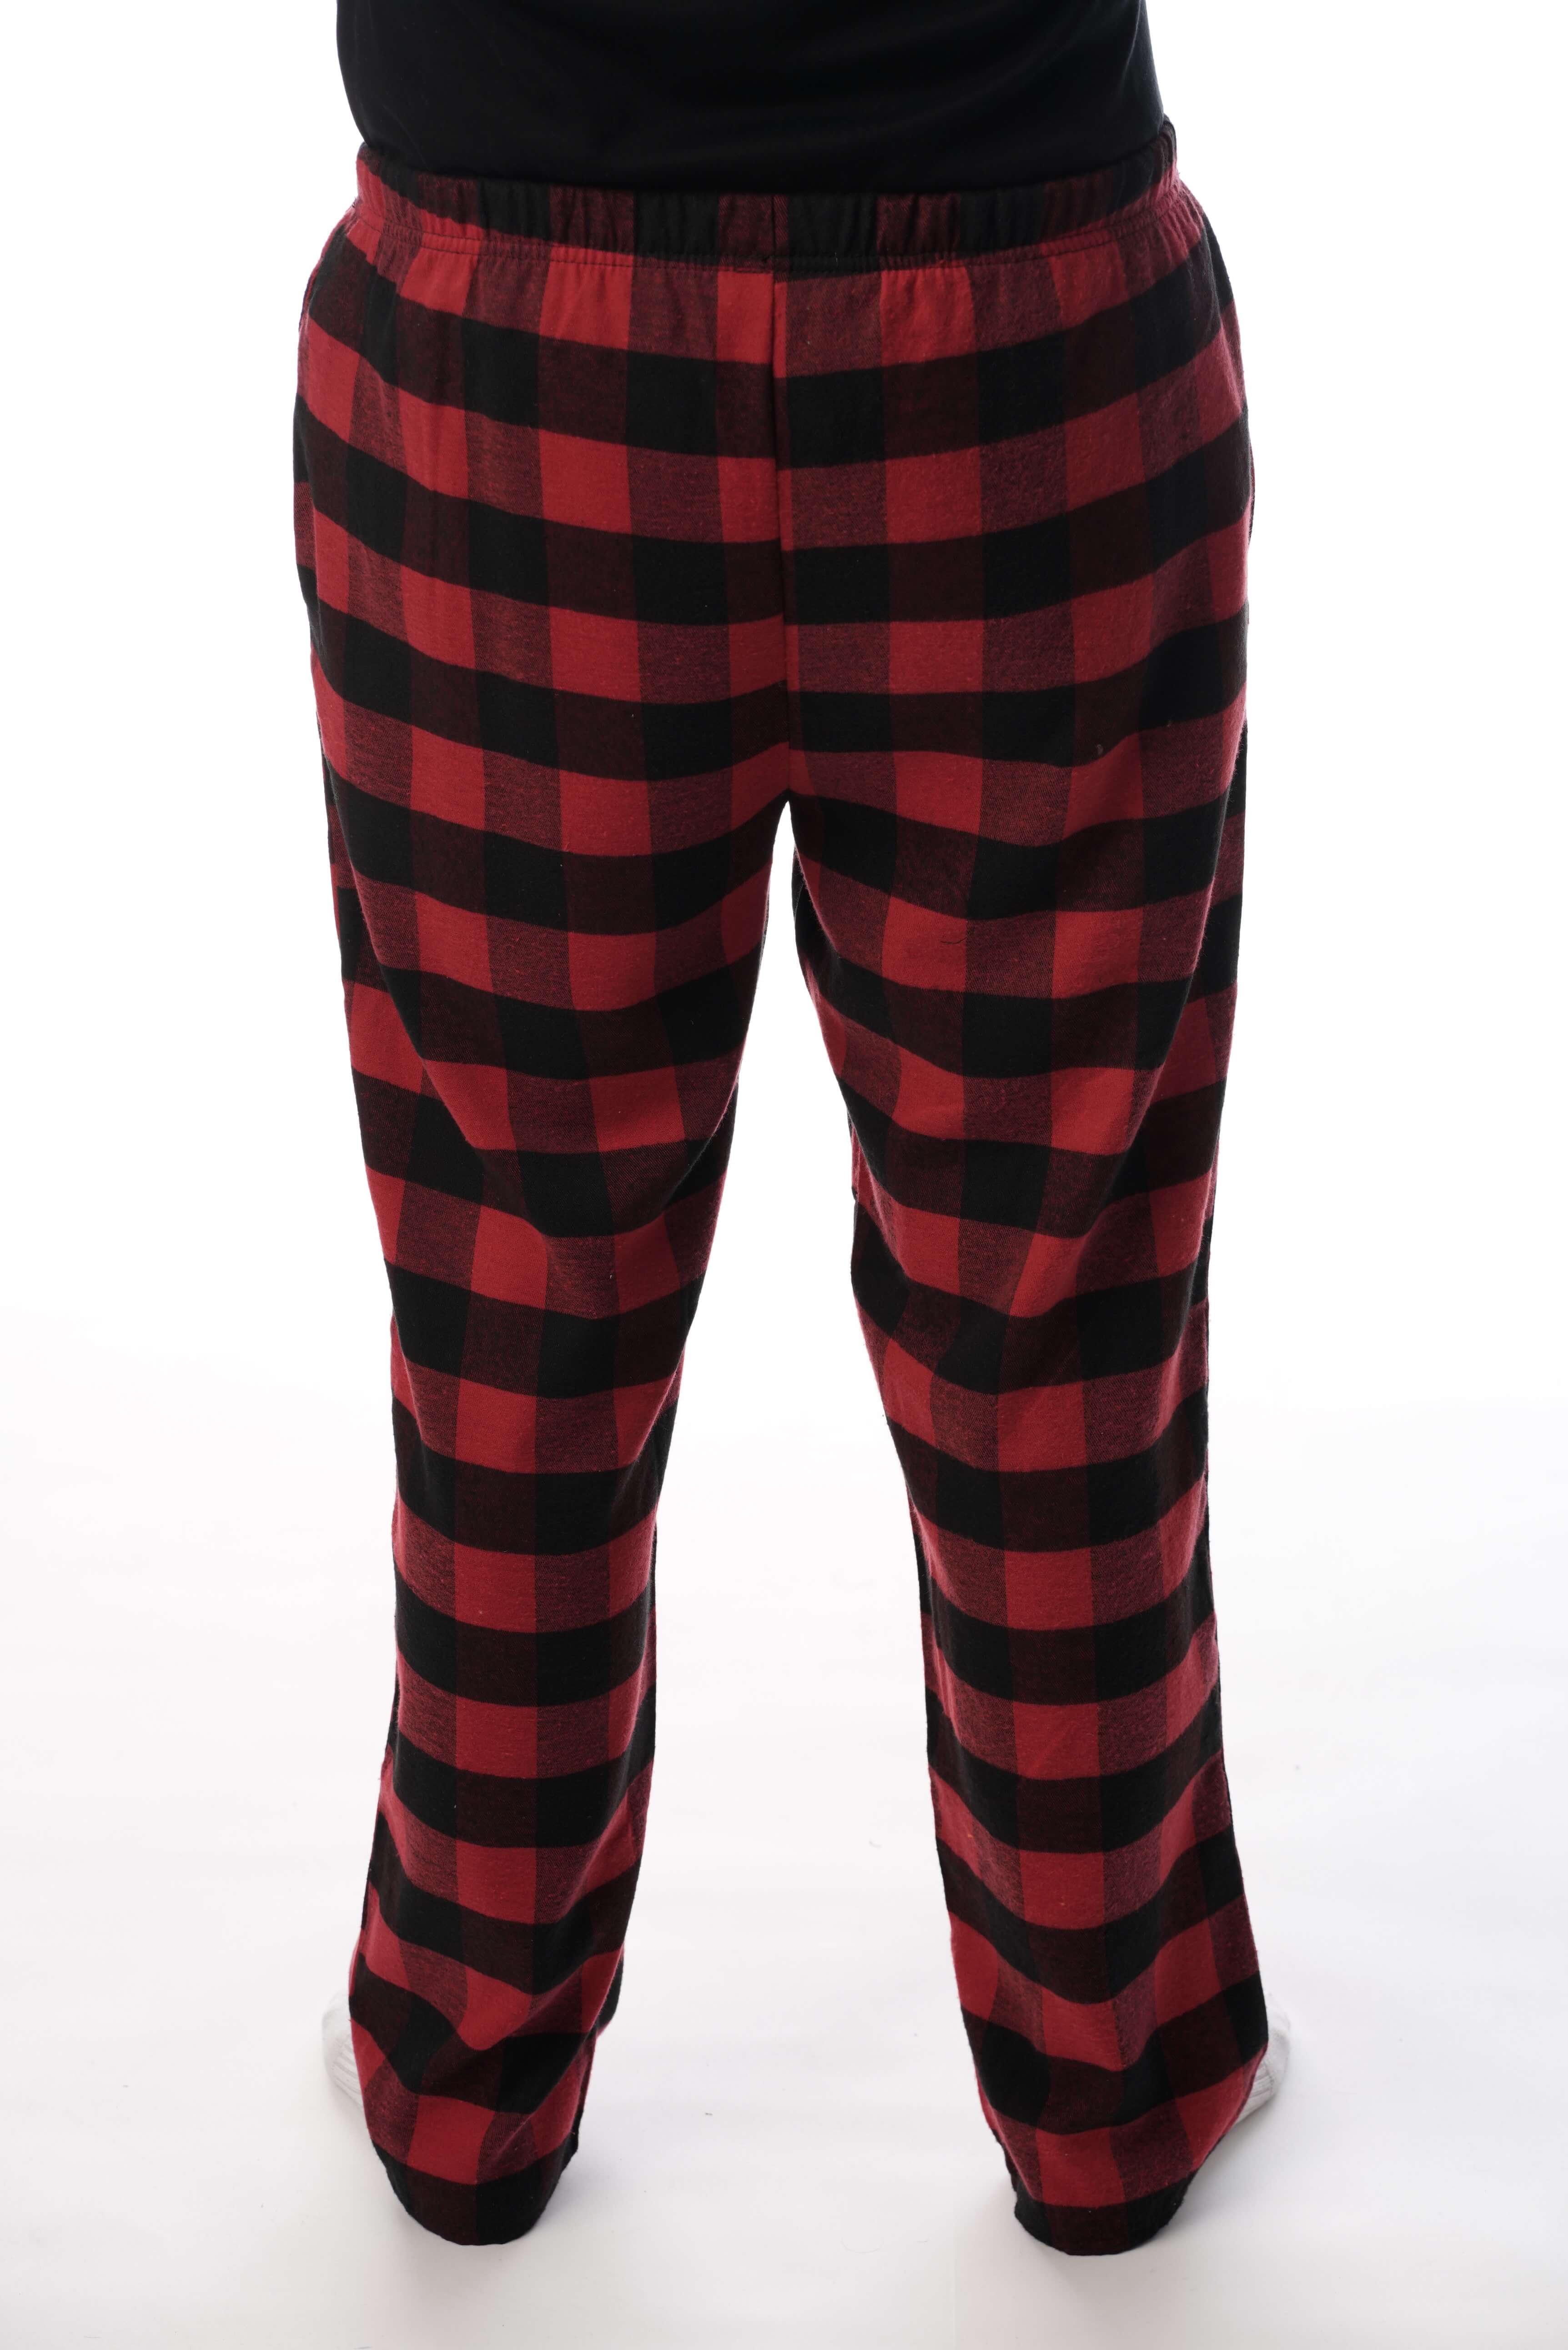 NWT PENDLETON XL Pajama Pants Beige Plaid Bottoms Pajamas Men's | eBay